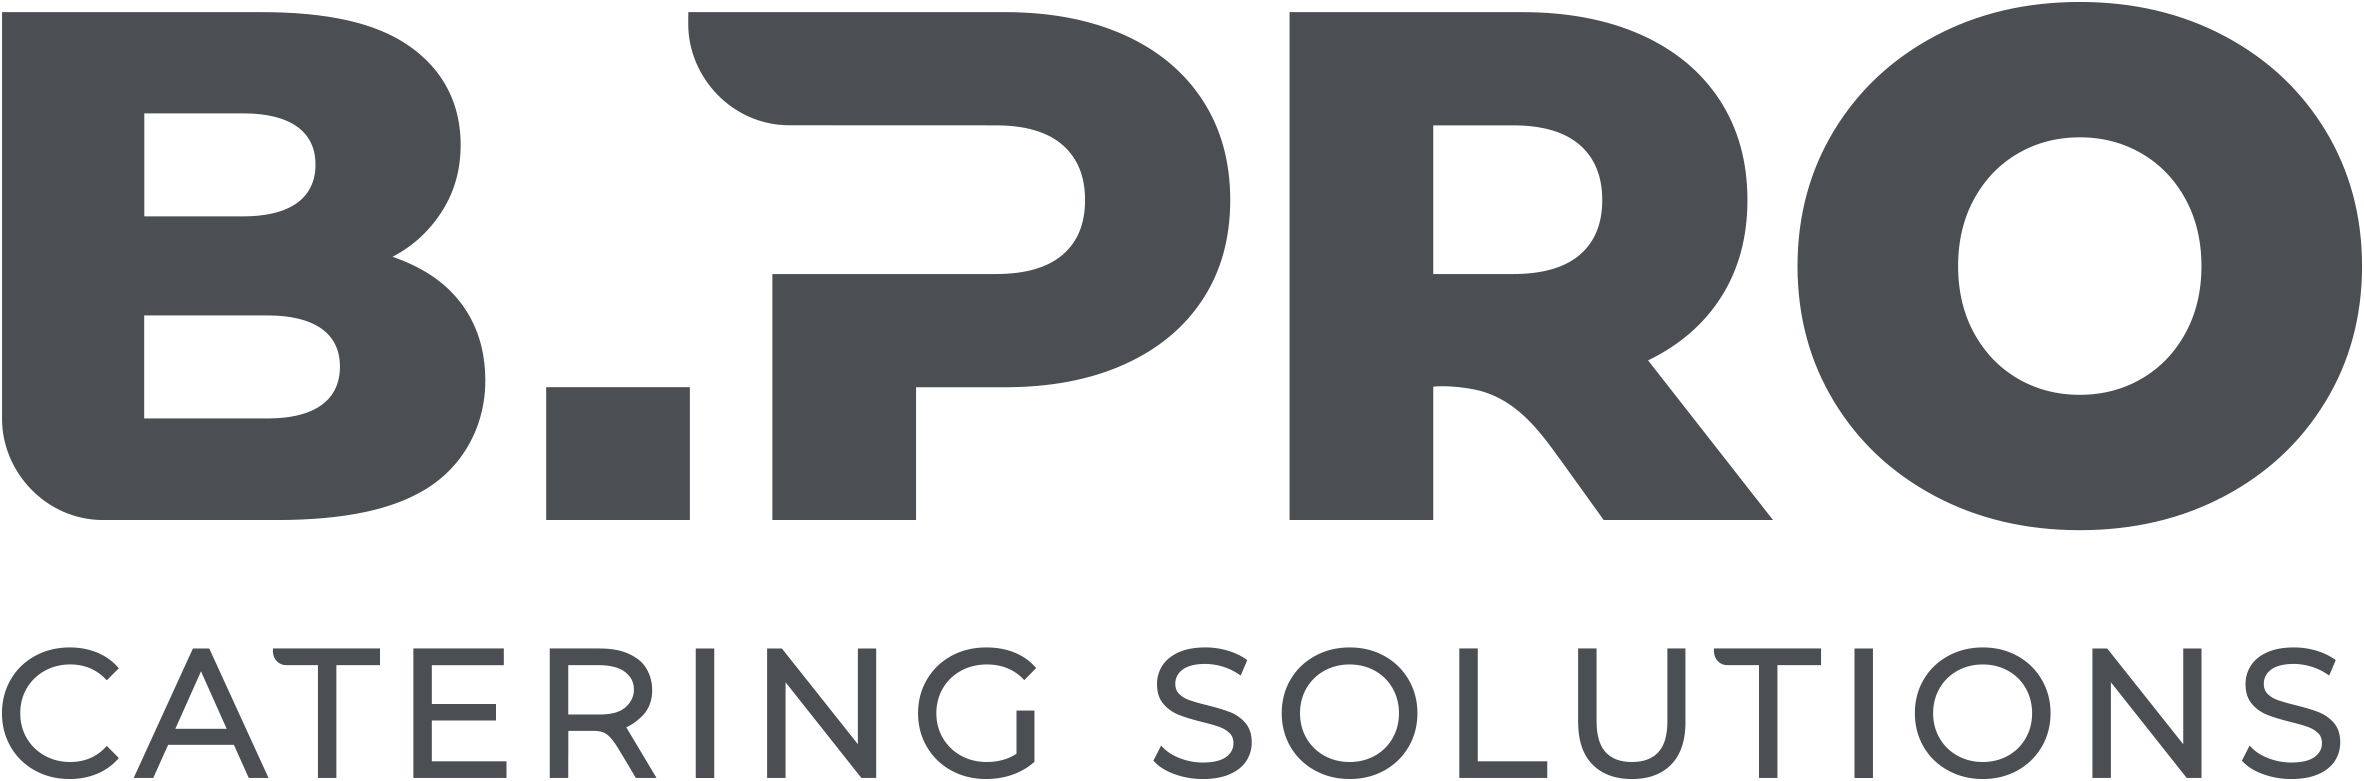 BPRO_Logo_subline_rgb